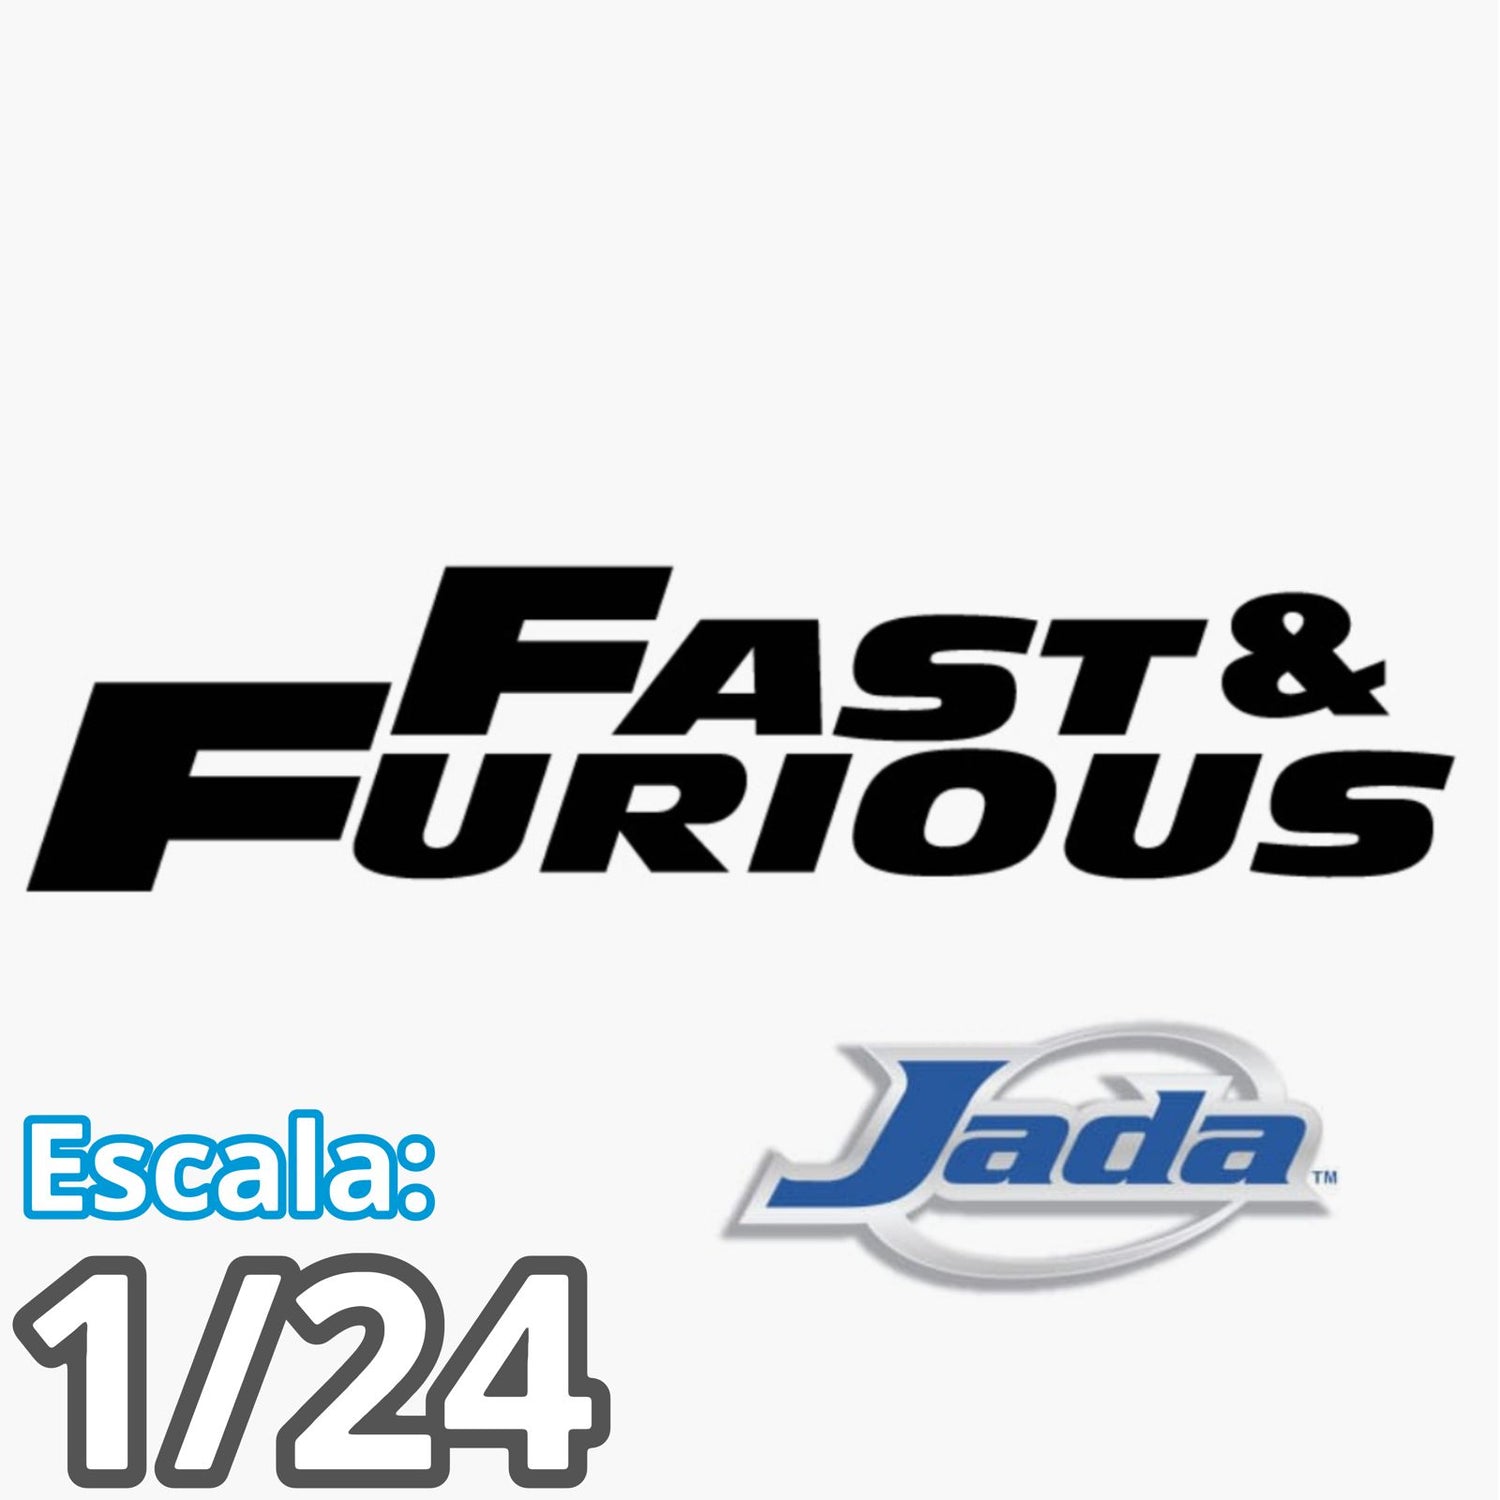 Fast&furious 1/24